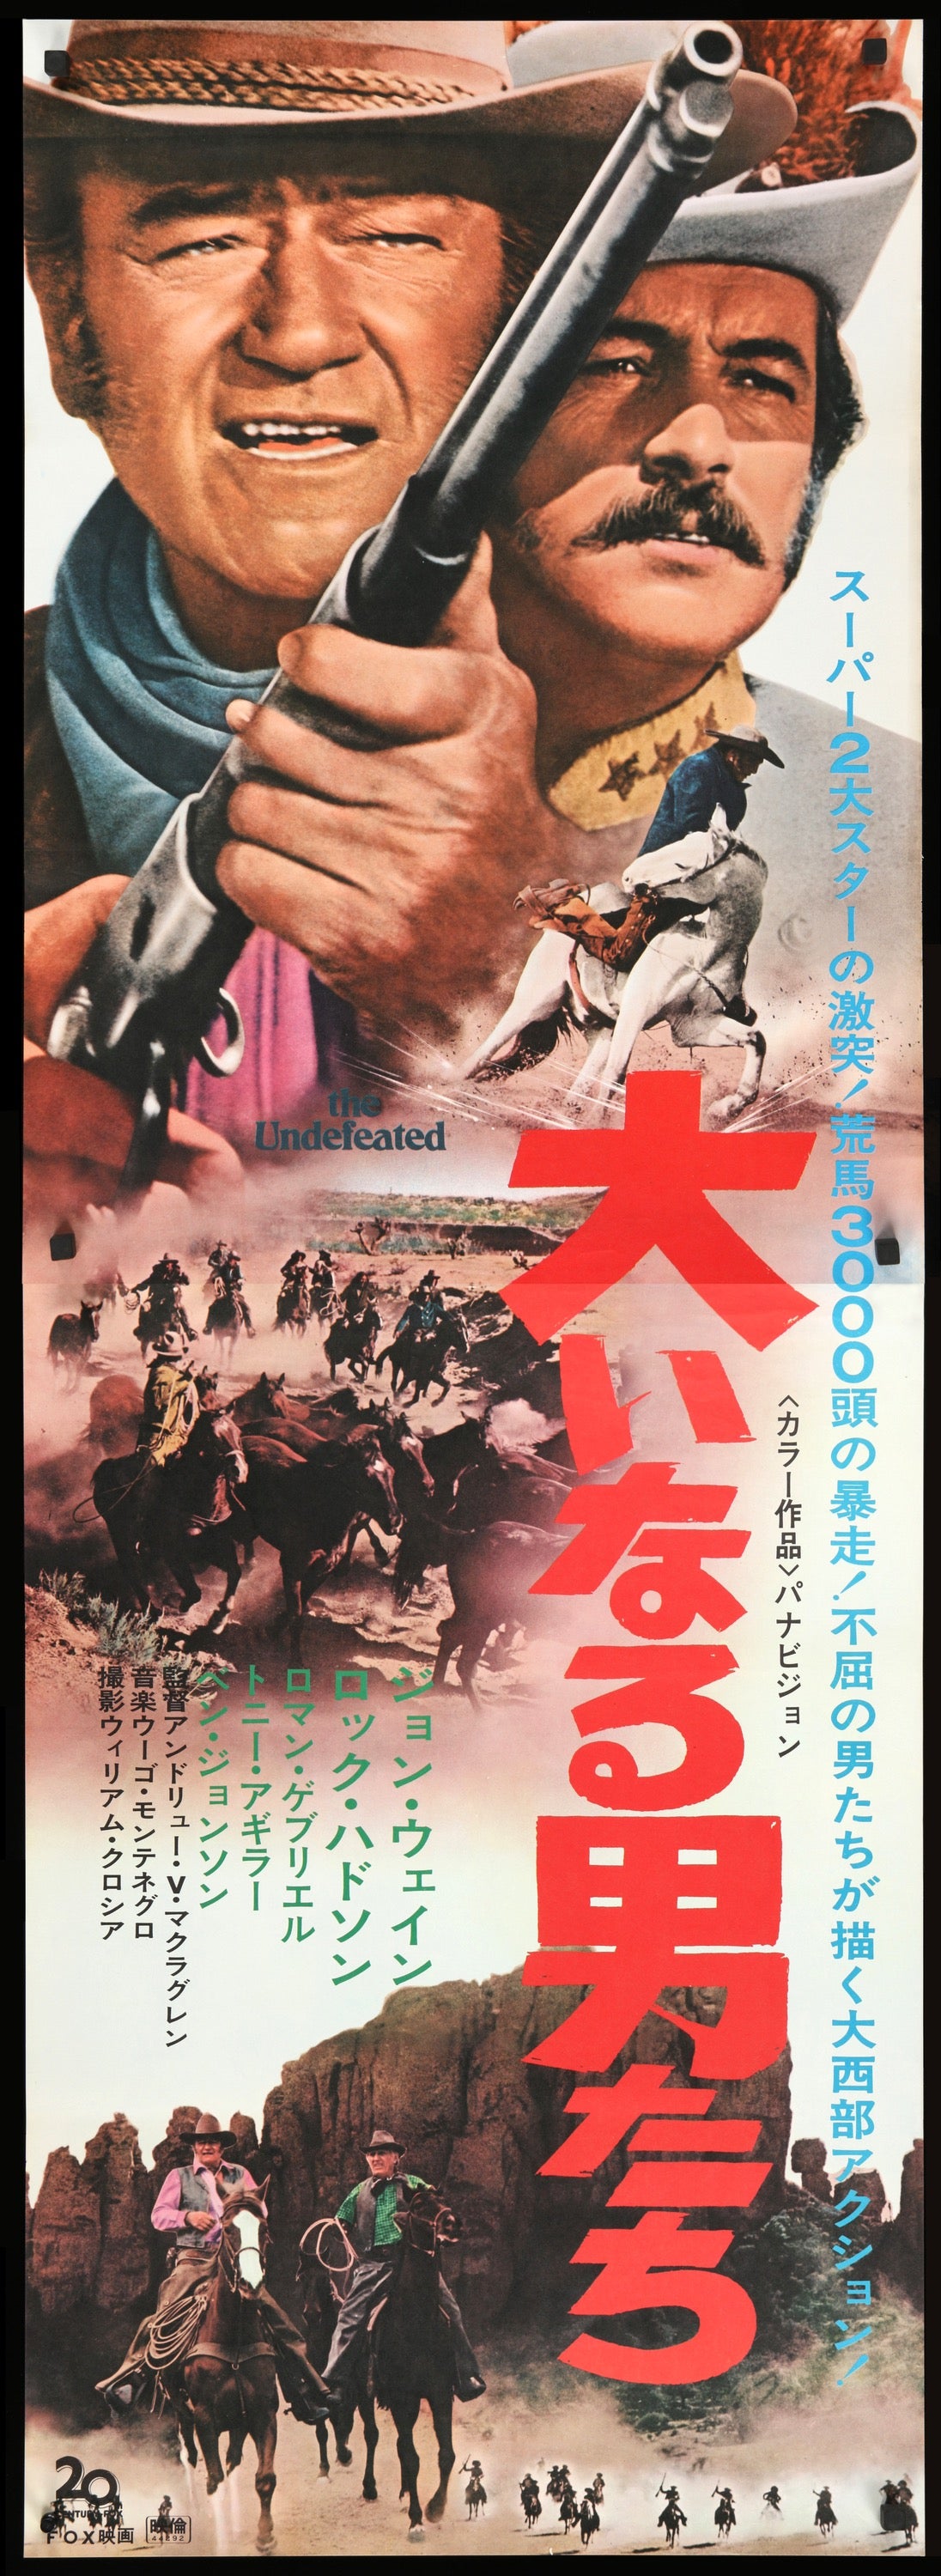 Undefeated (1969) original movie poster for sale at Original Film Art